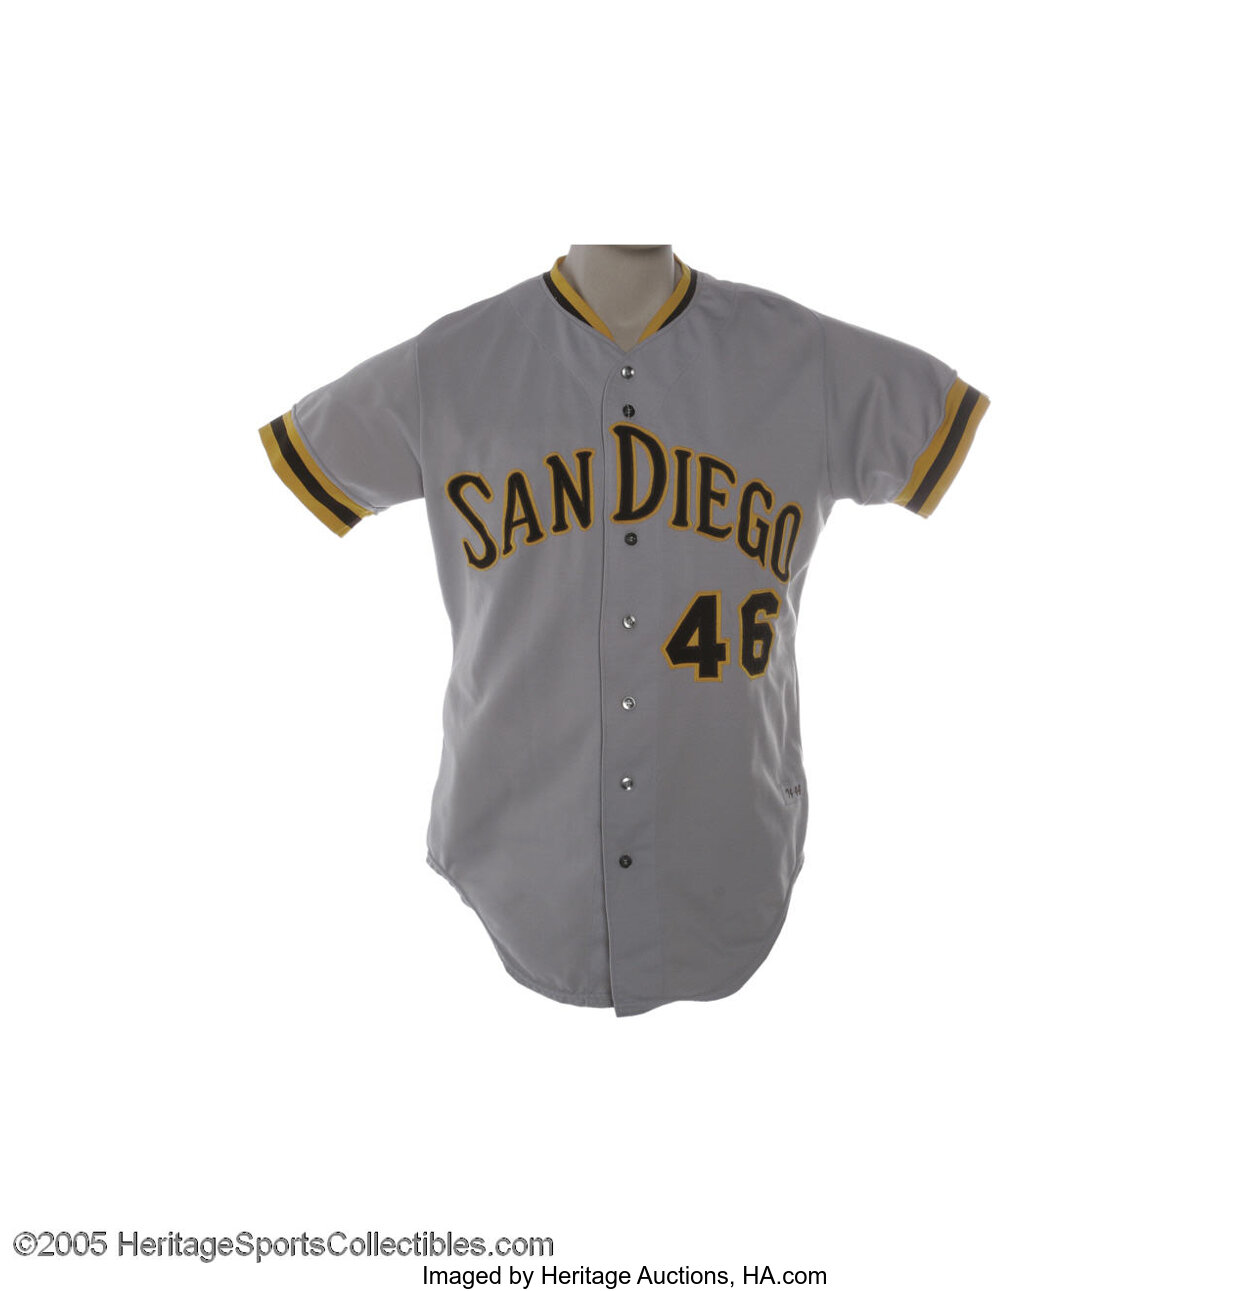 1975 San Diego Padres Game Worn Uniform. A very tough single-year